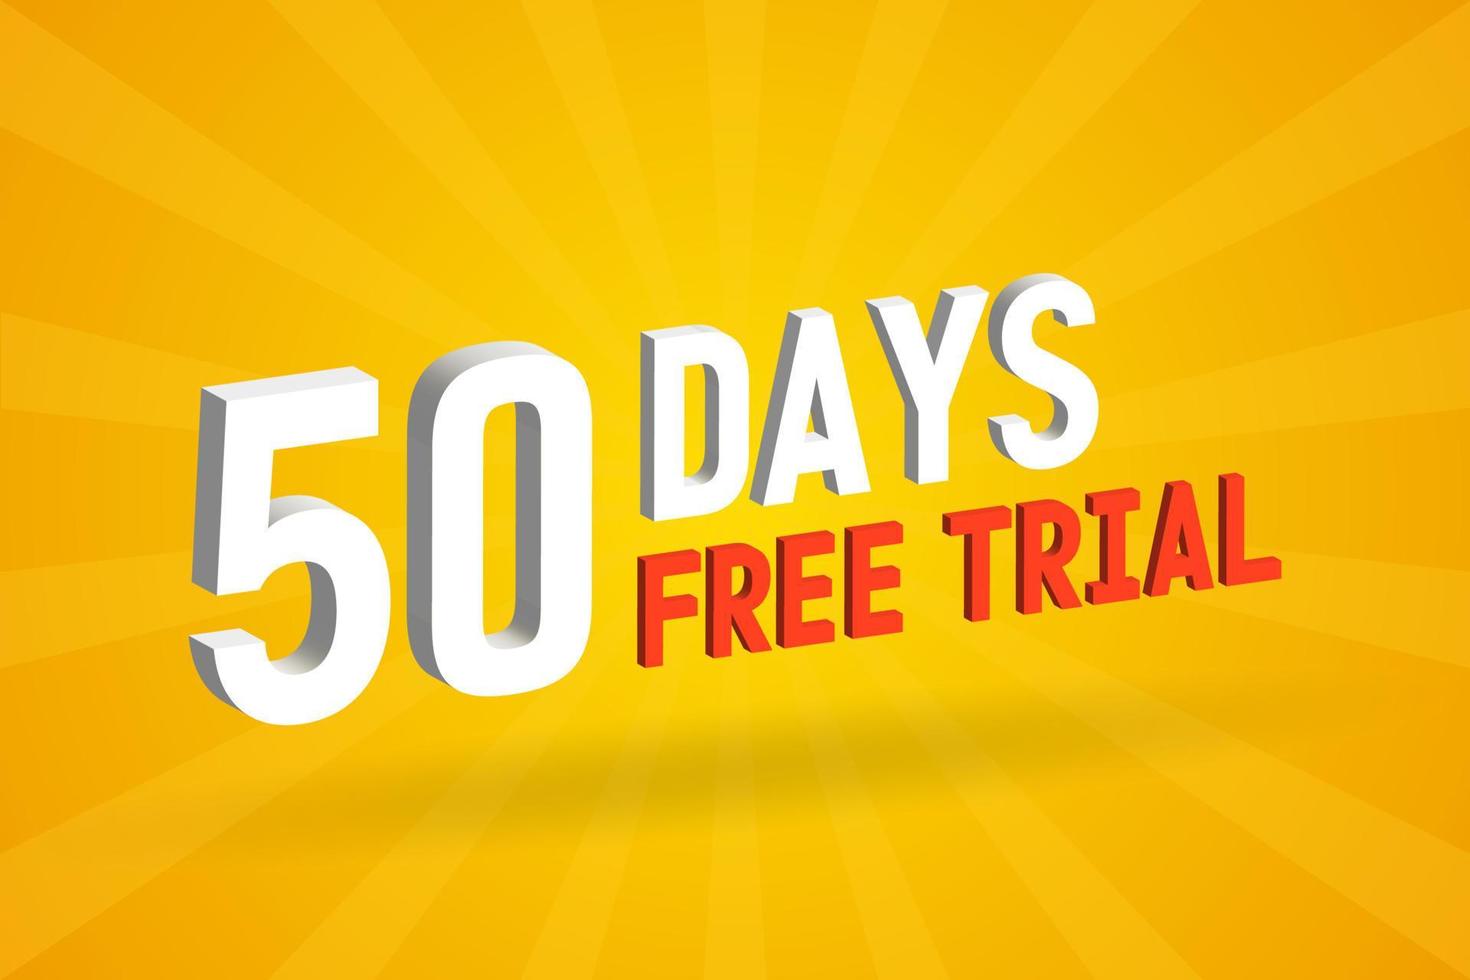 oferta gratuita 50 días de prueba gratuita texto 3d stock vector